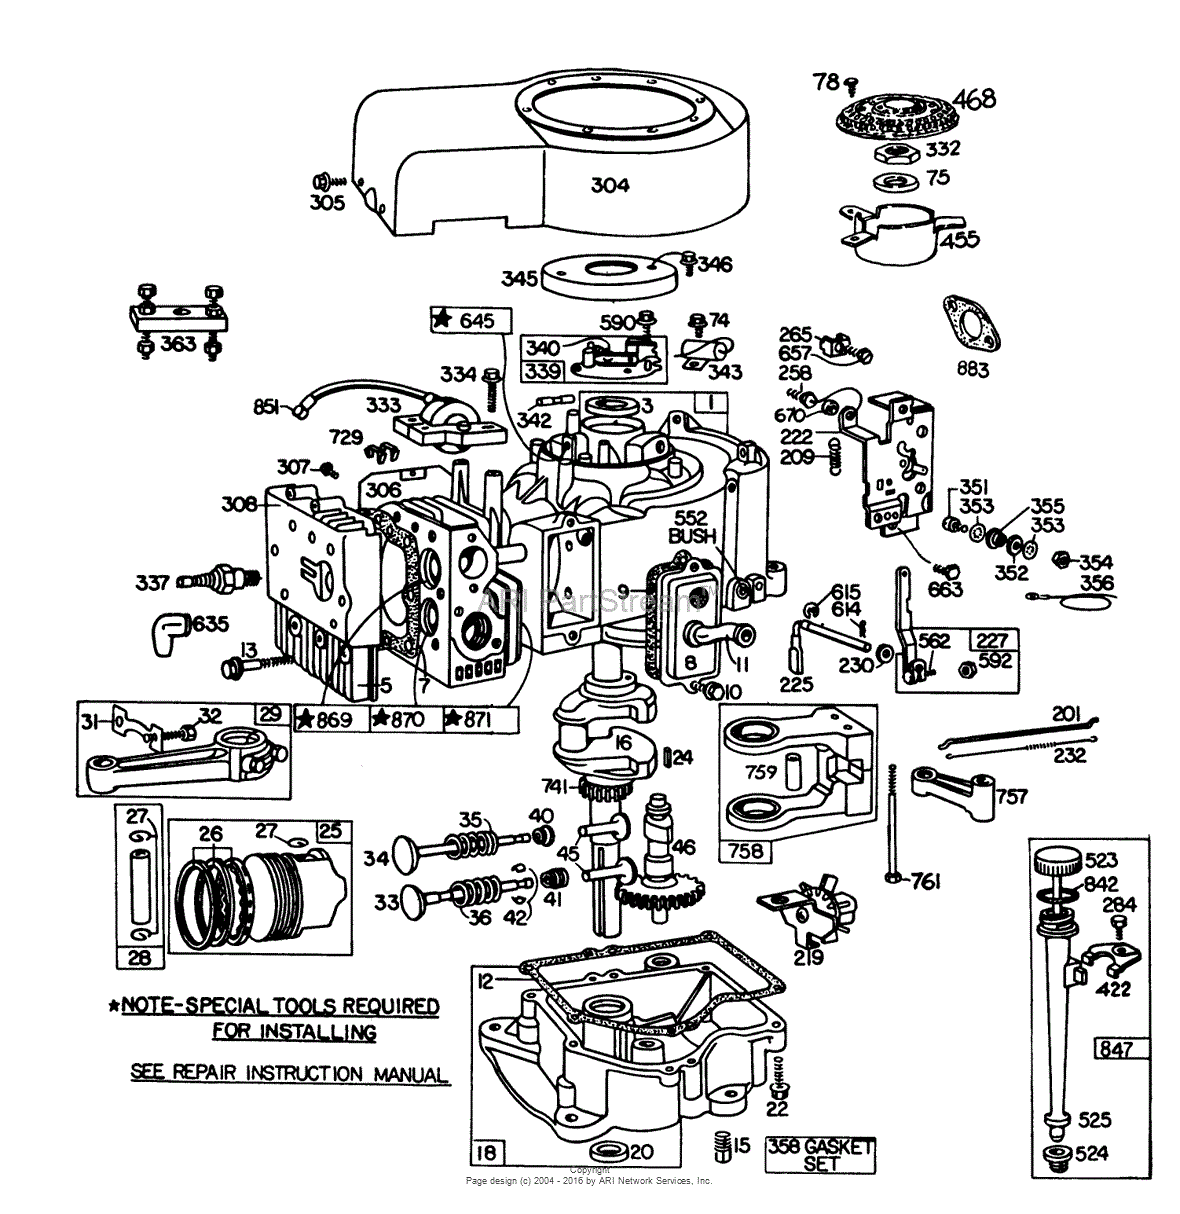 Briggs And Stratton Engine Diagram sportsmandesign